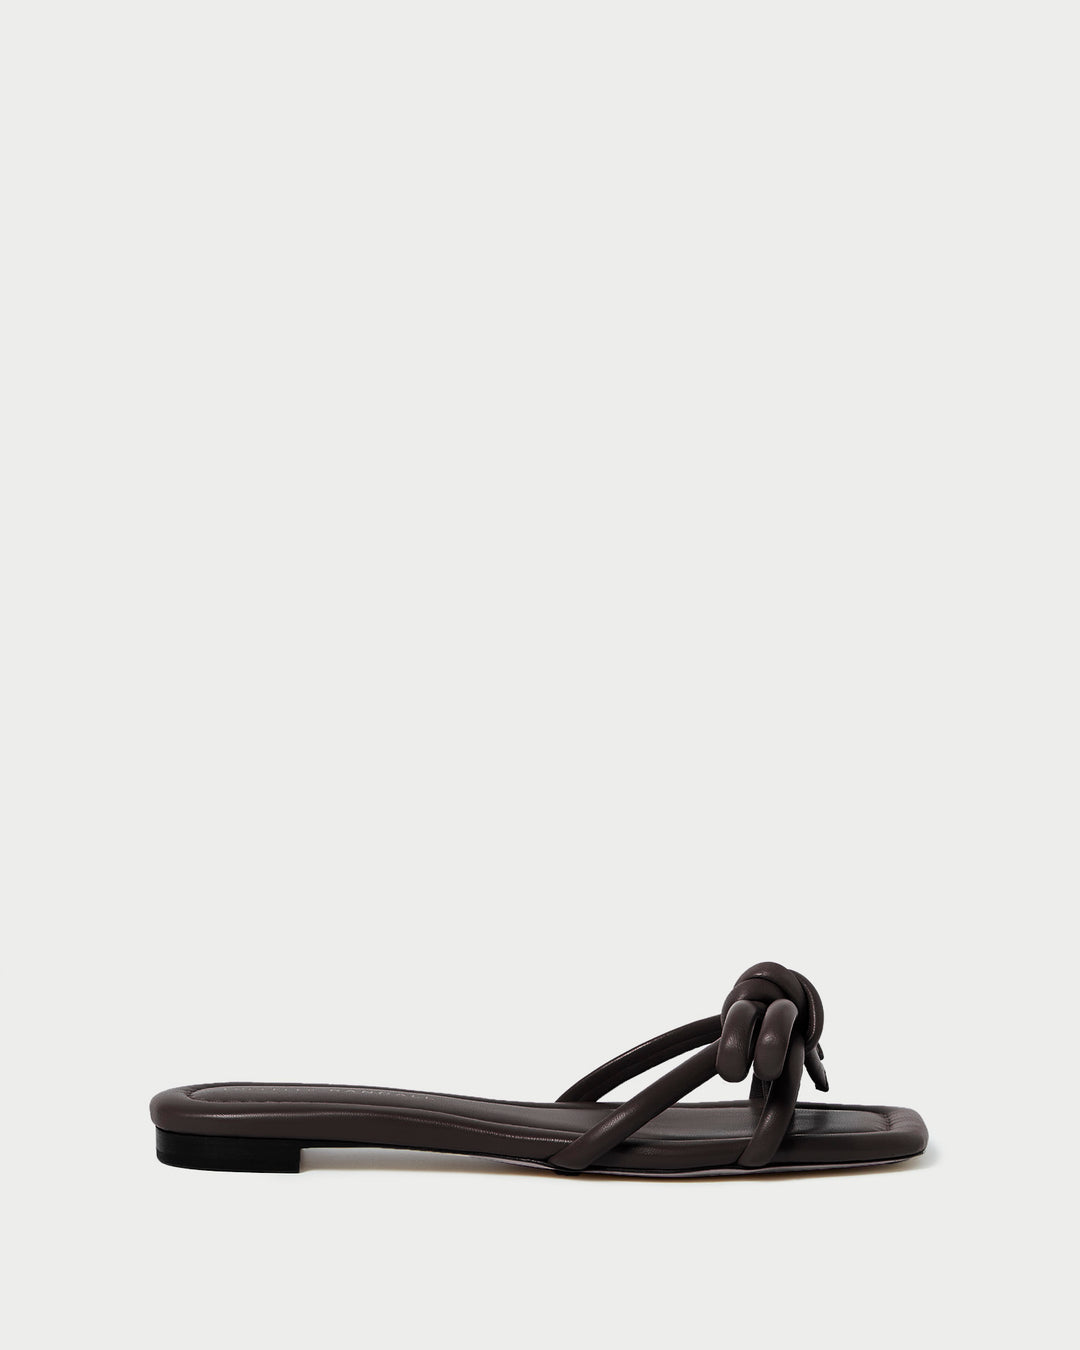 Loeffler Randall | Hadley Cacao Bow Sandal I Flat Sandals I Footwear